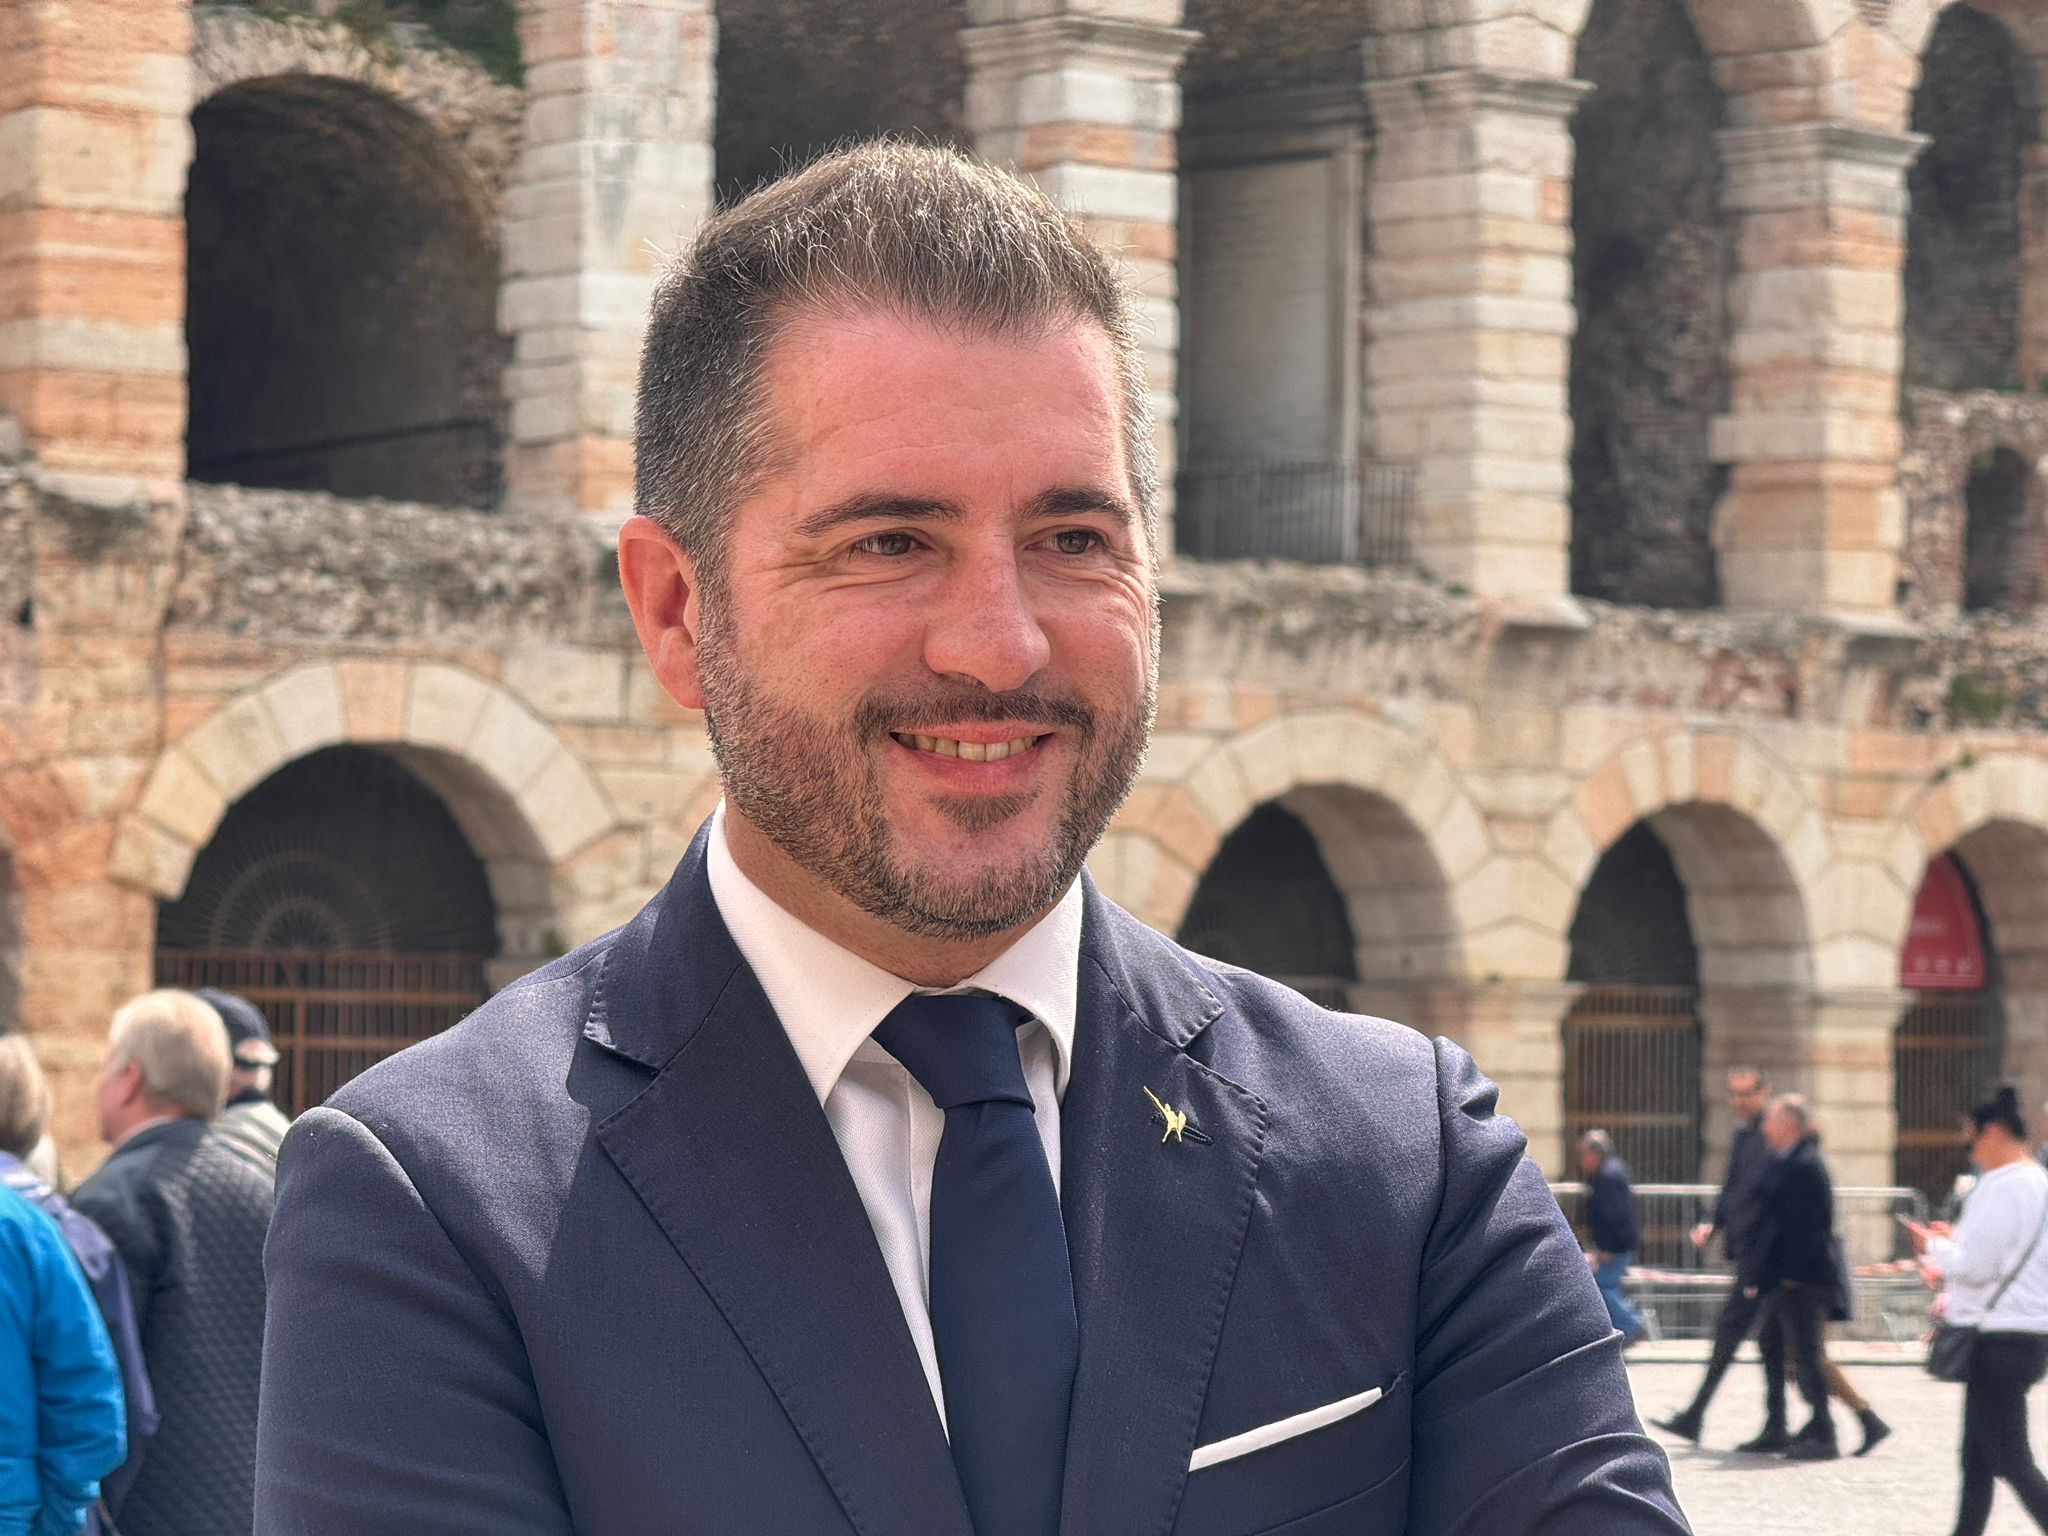 La Lega punta al botto su Verona rischierando Paolo Borchia per le Europee 2024